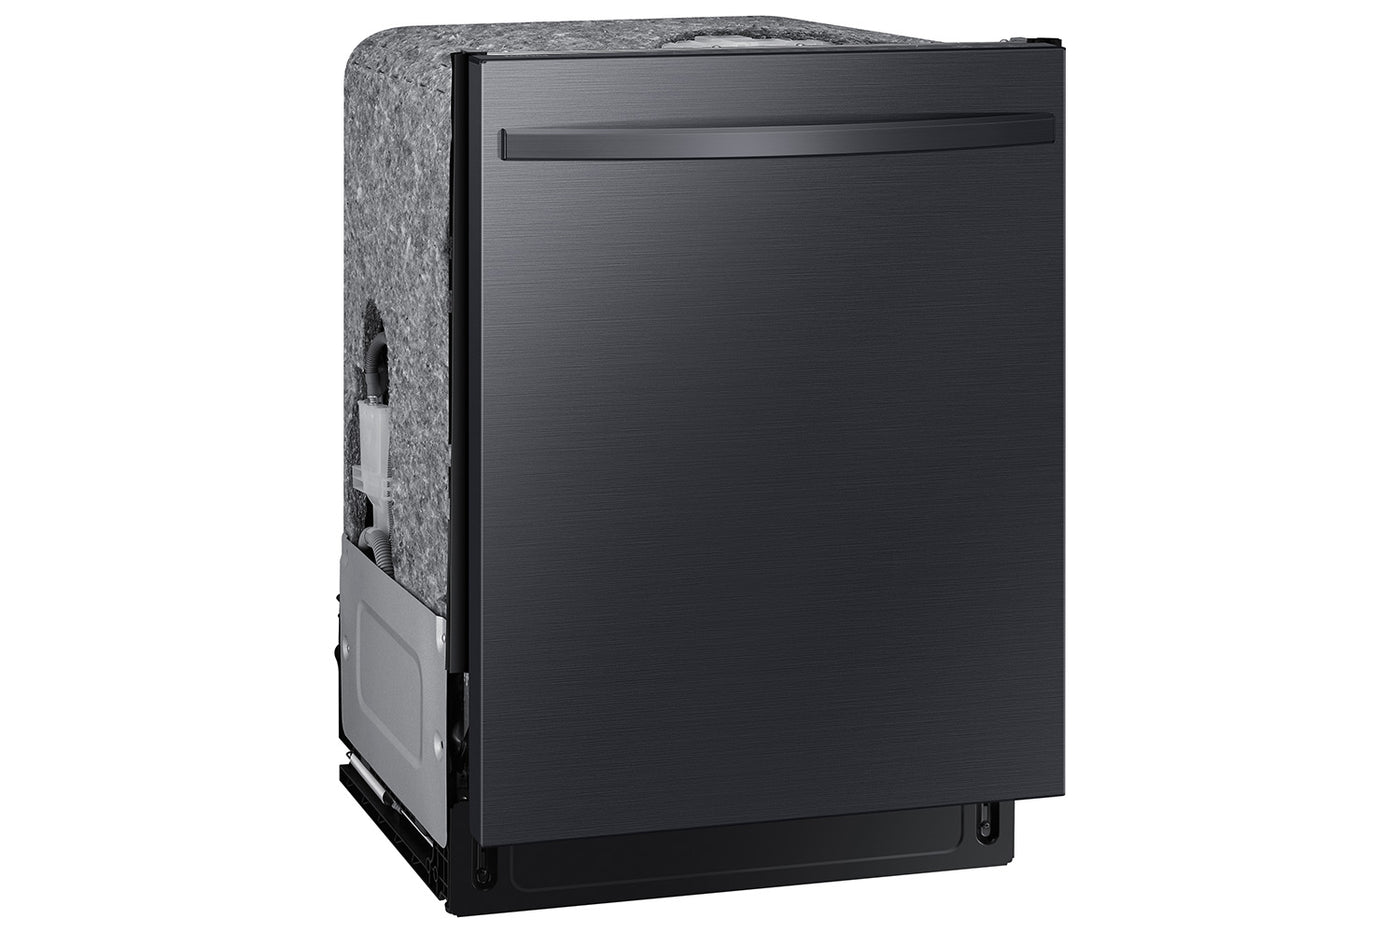 Samsung Matte Black Stainless Steel 3rd Rack Dishwasher - DW80CG5451MTAA